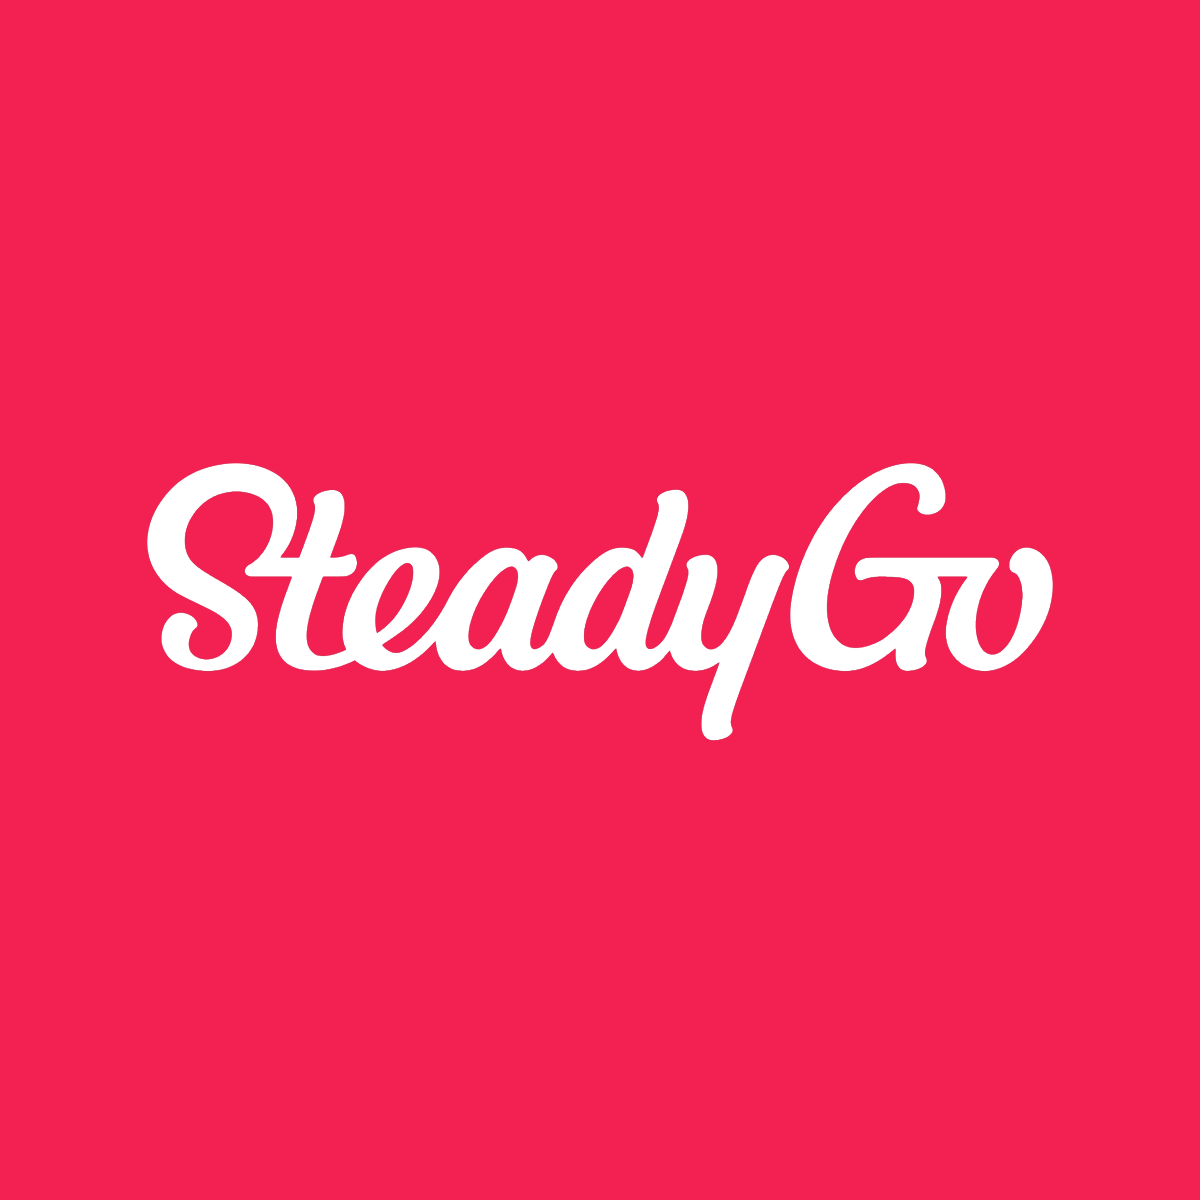 (c) Steadygo.digital